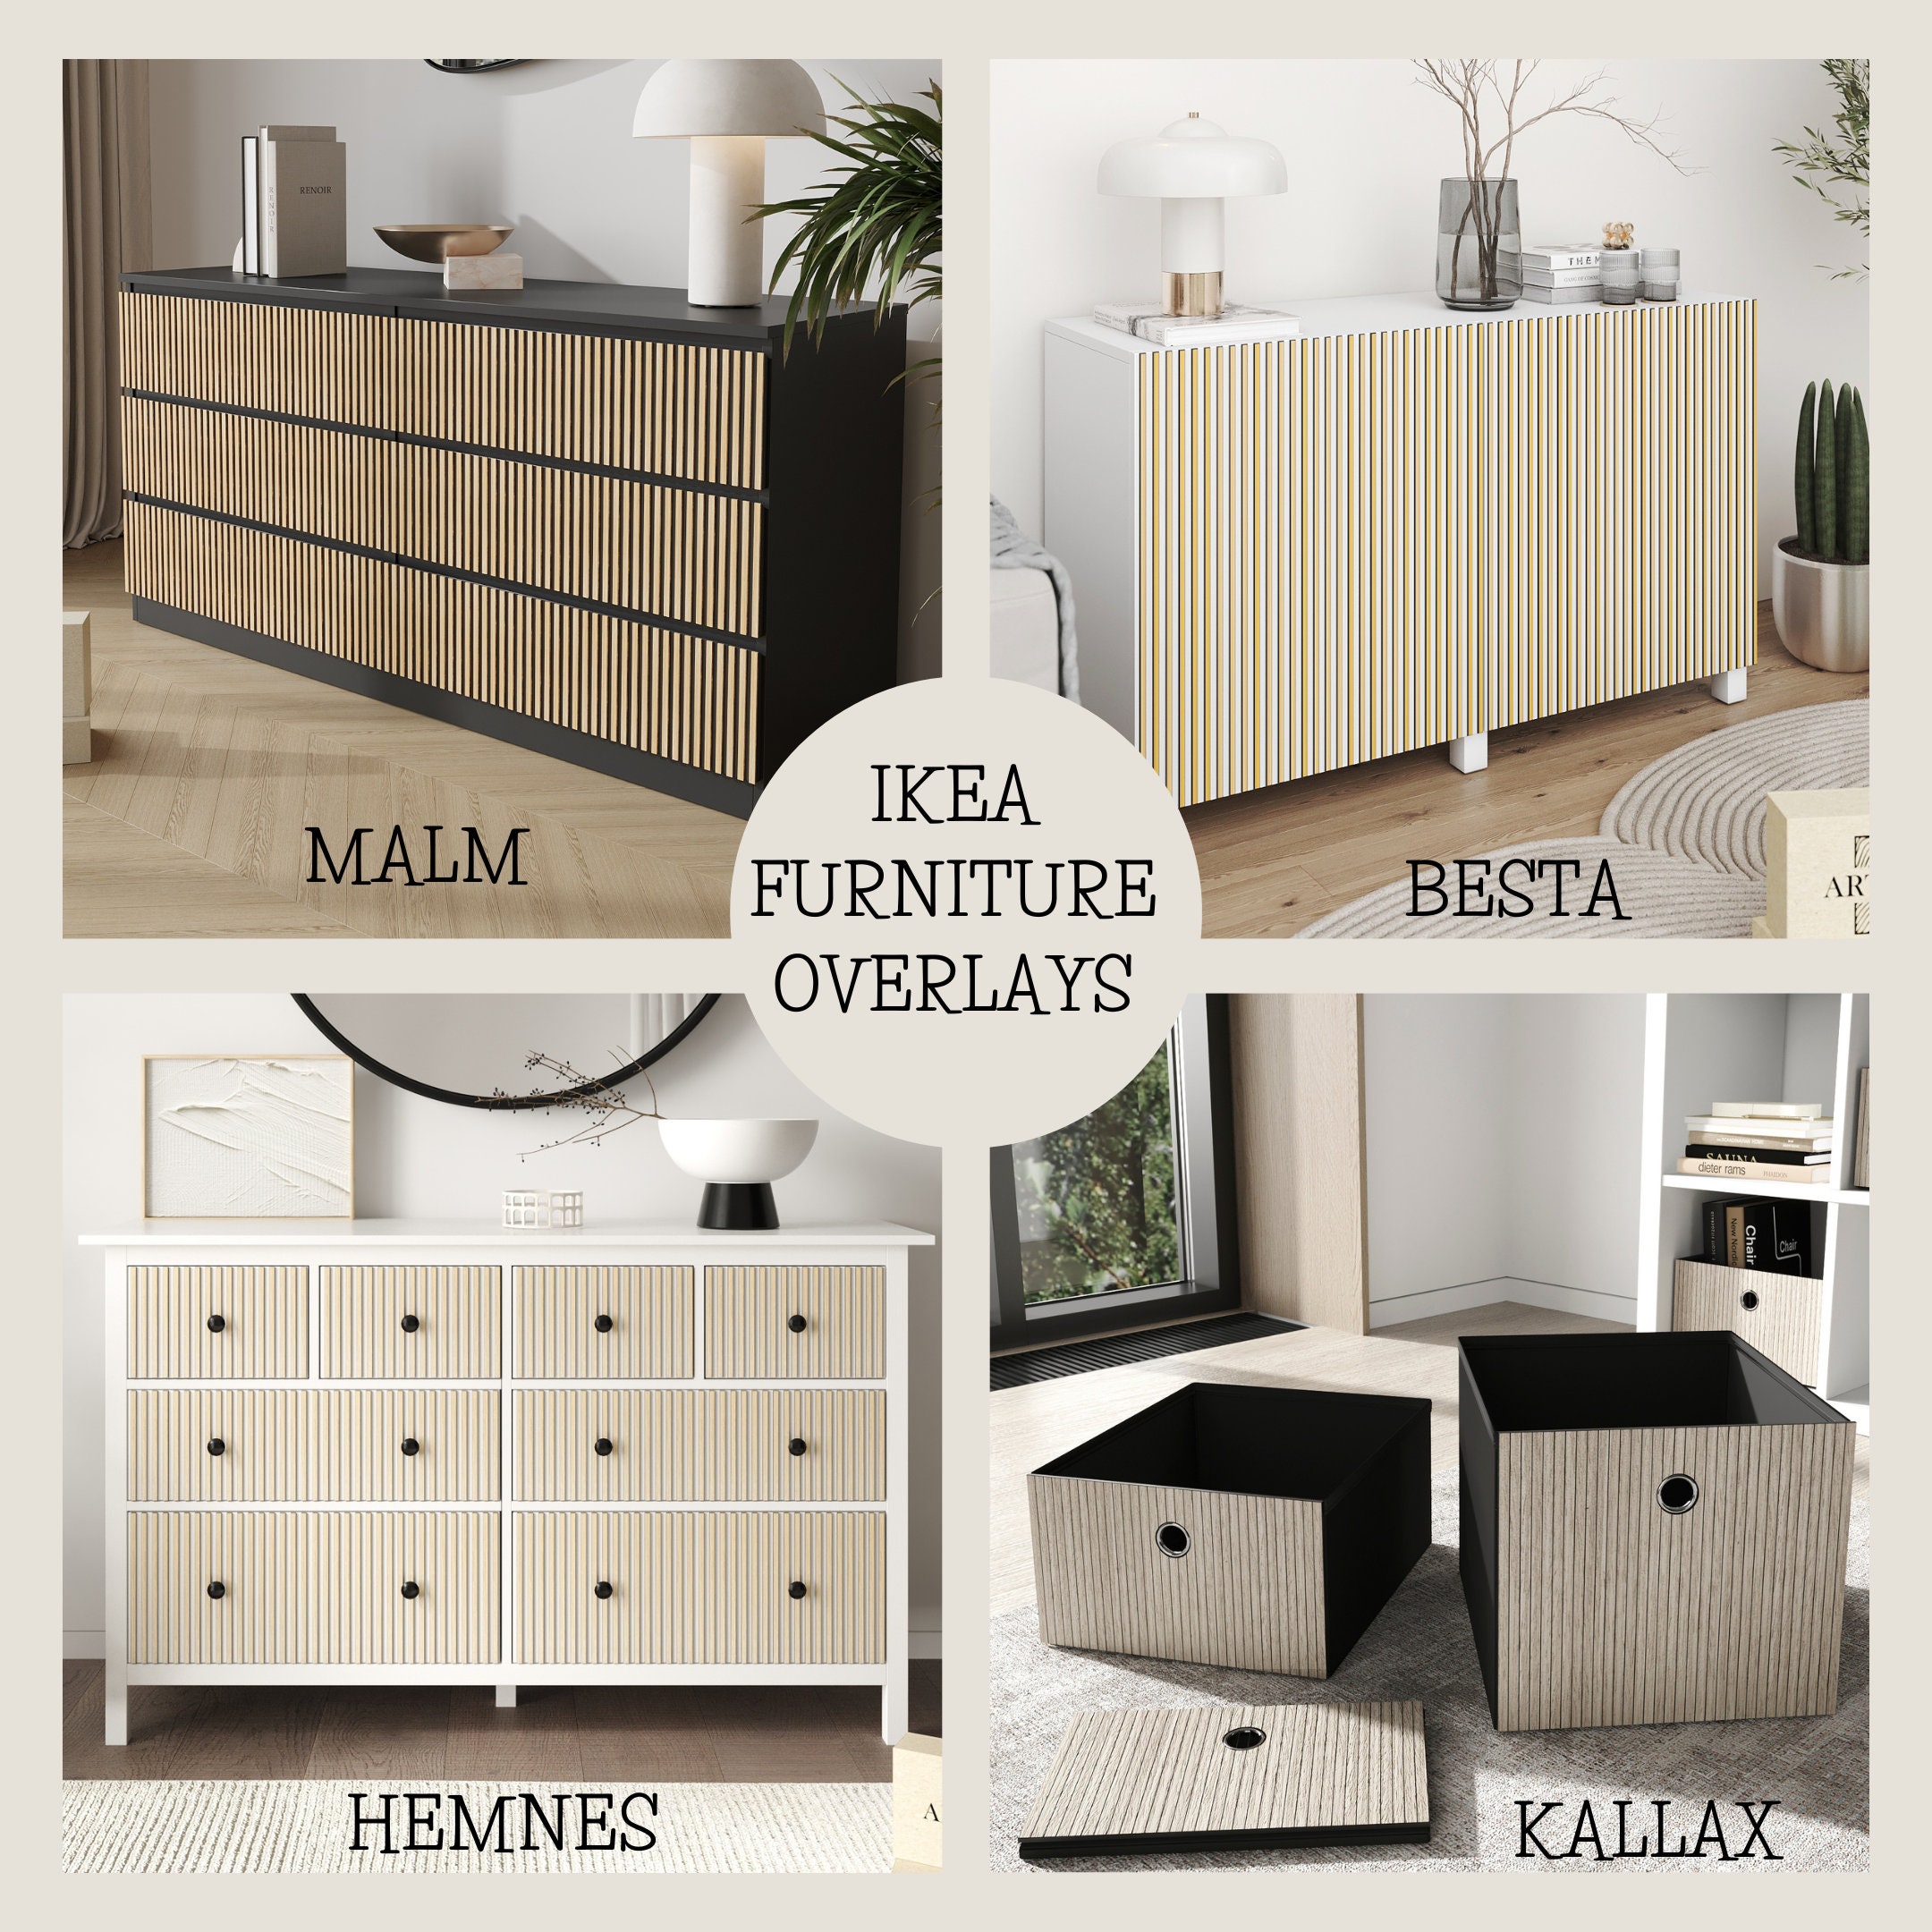 Ikea nordli dresser - Etsy Nederland